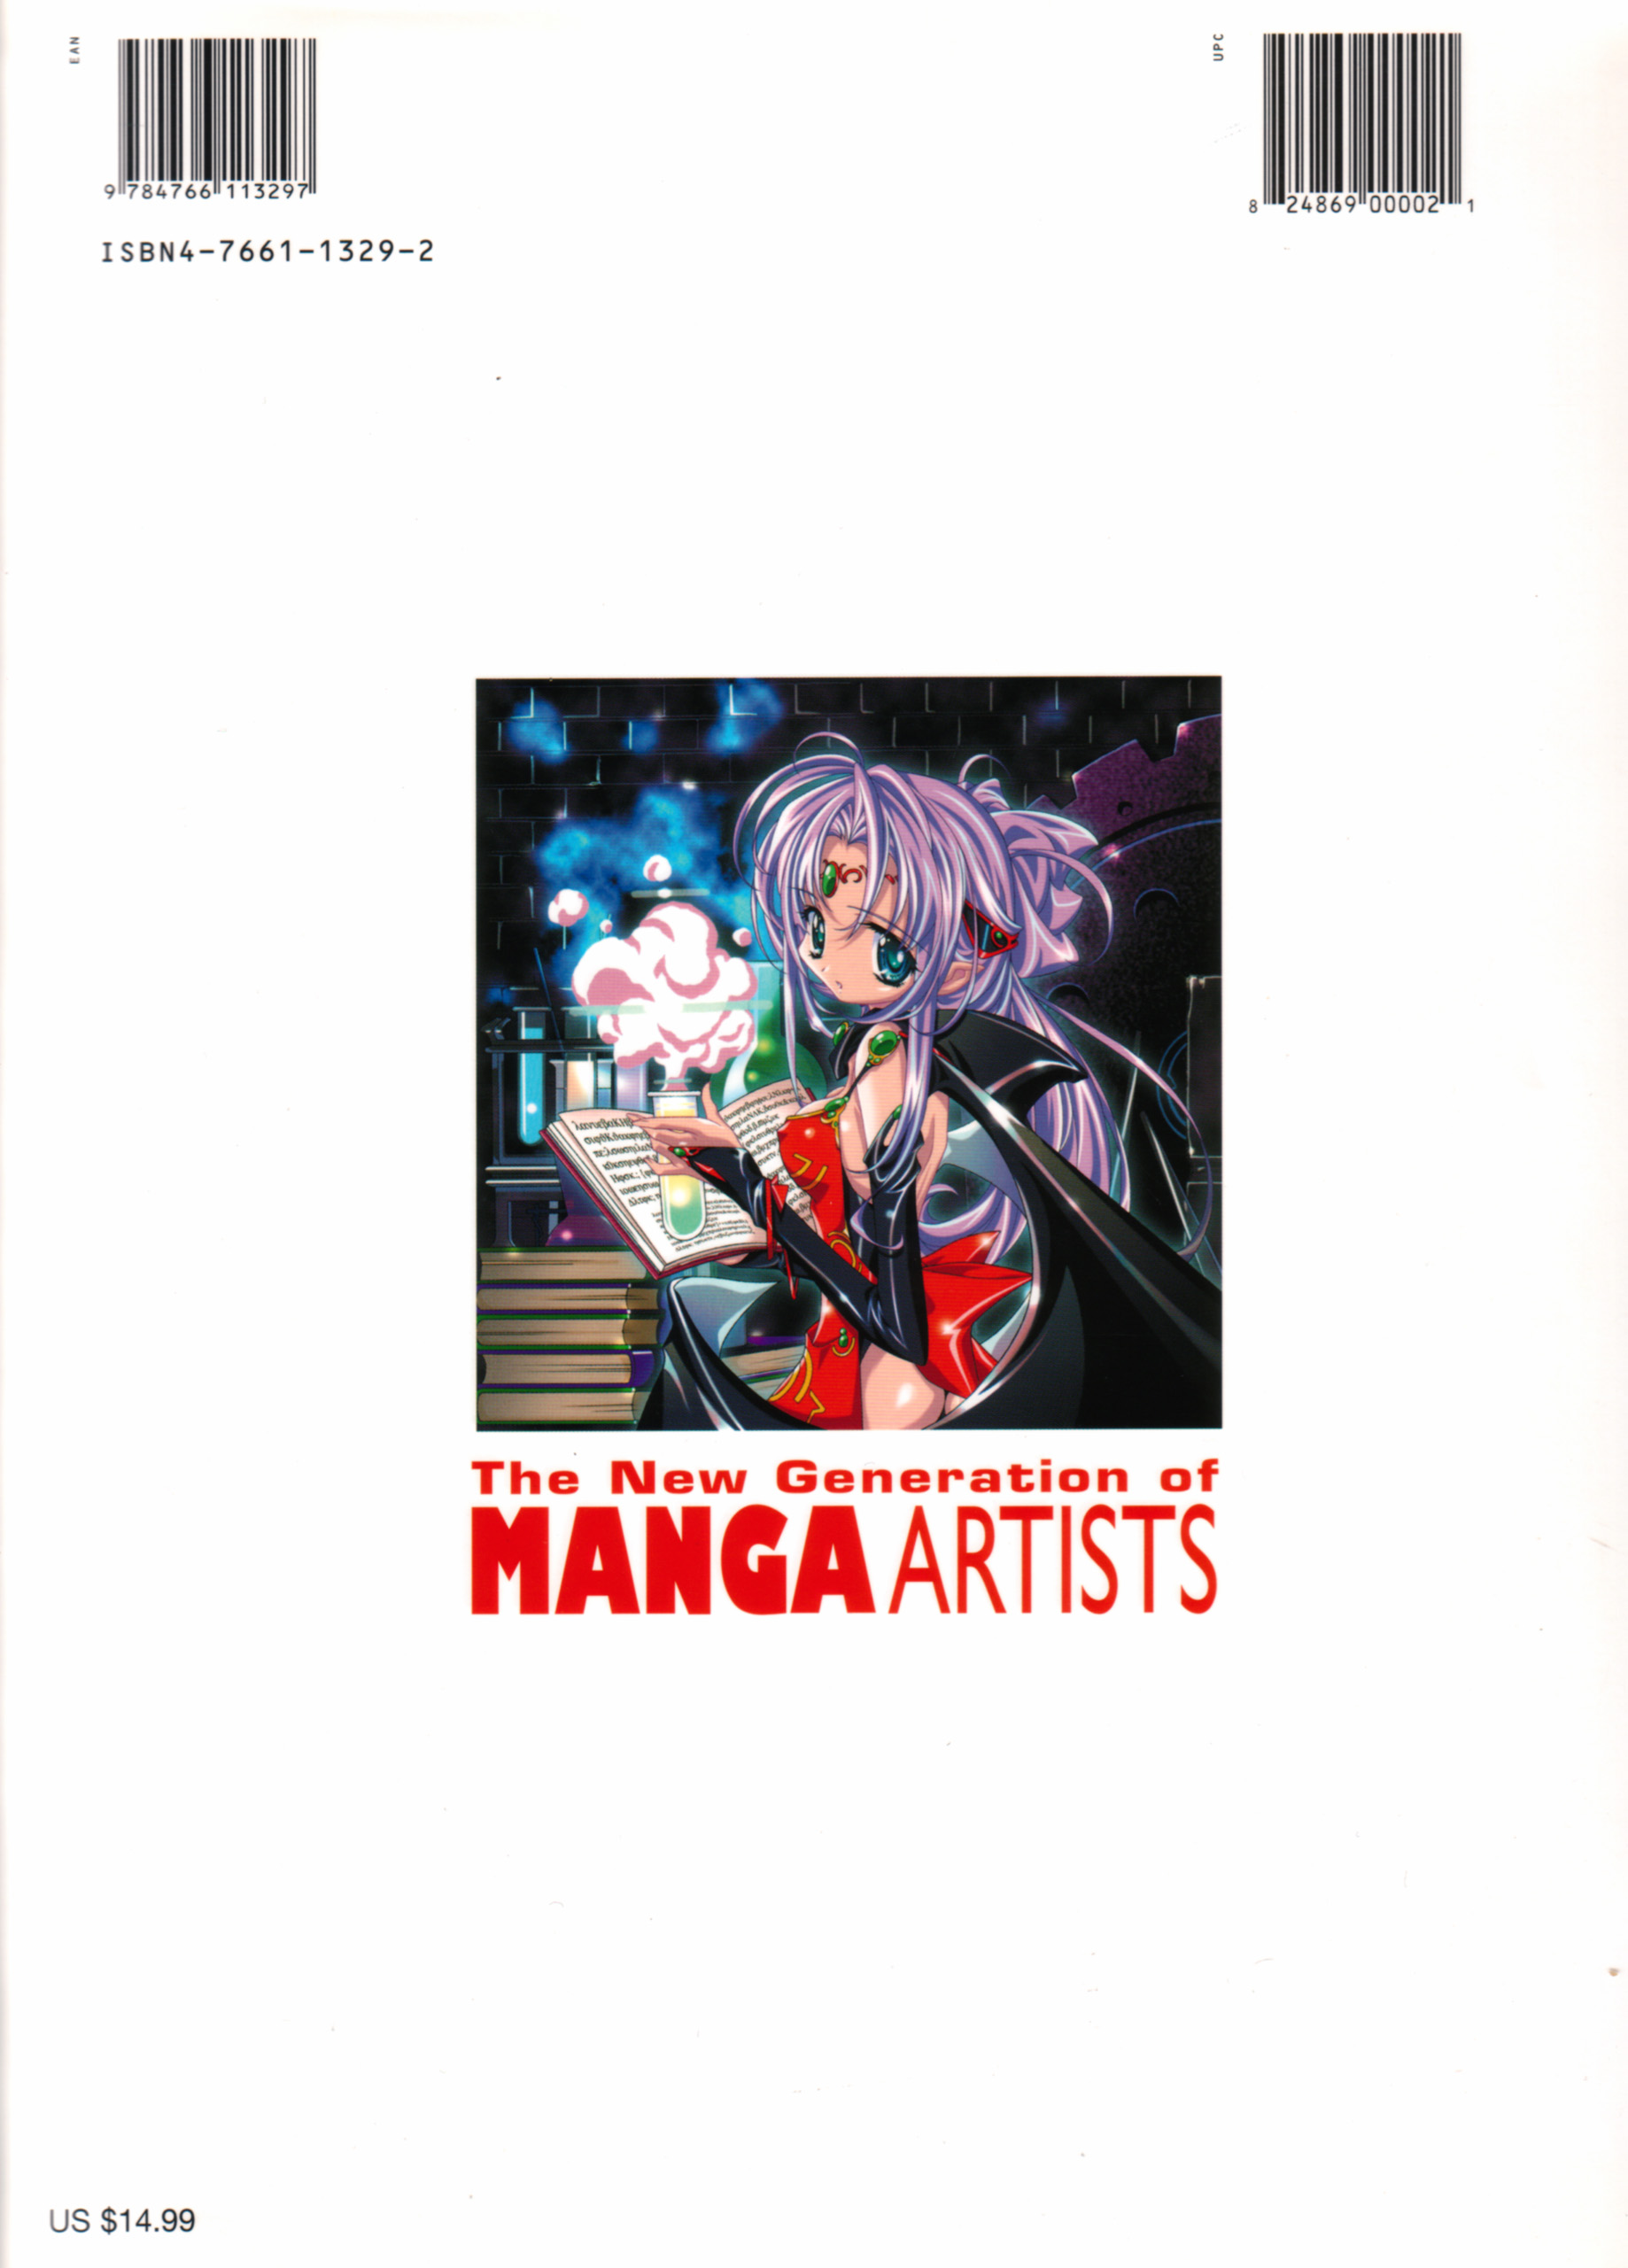 The New Generation of Manga Artists vol.2 - The Gensho Sugiyama Portfolio - gensho_sugiyama_portfolio_000-back.jpg